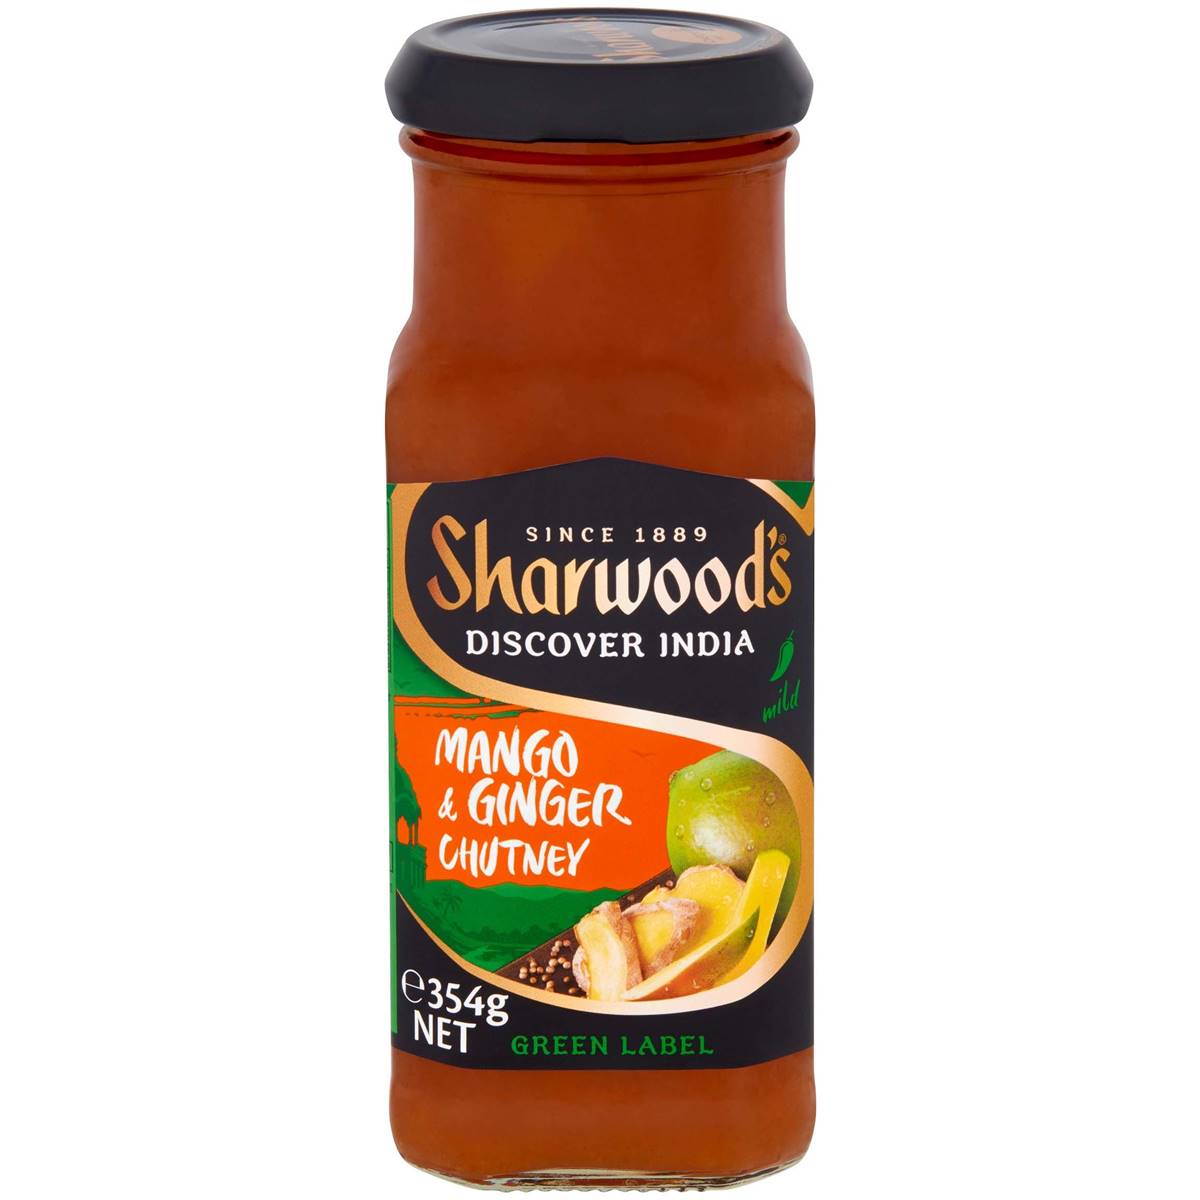 Calories in Sharwood's Mango & Ginger Chutney